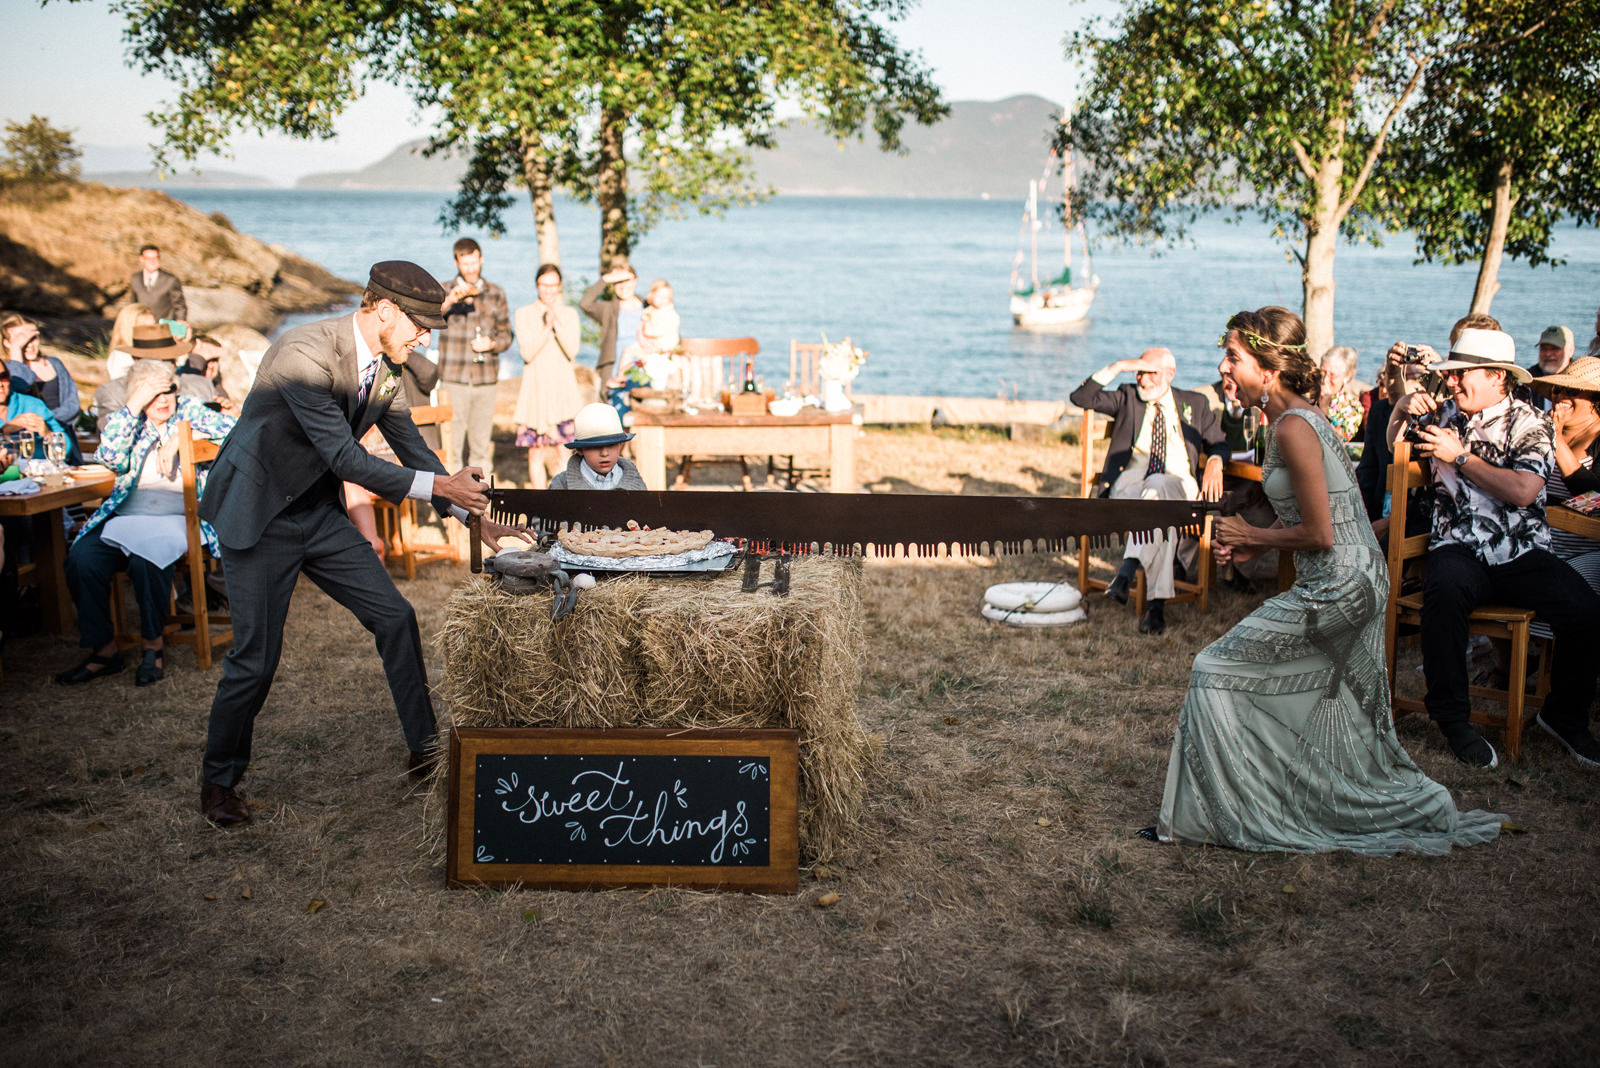 075-bride-and-groom-using-band-saw-to-cut-wedding-pie-by-orcas-island-wedding-photographer.jpg